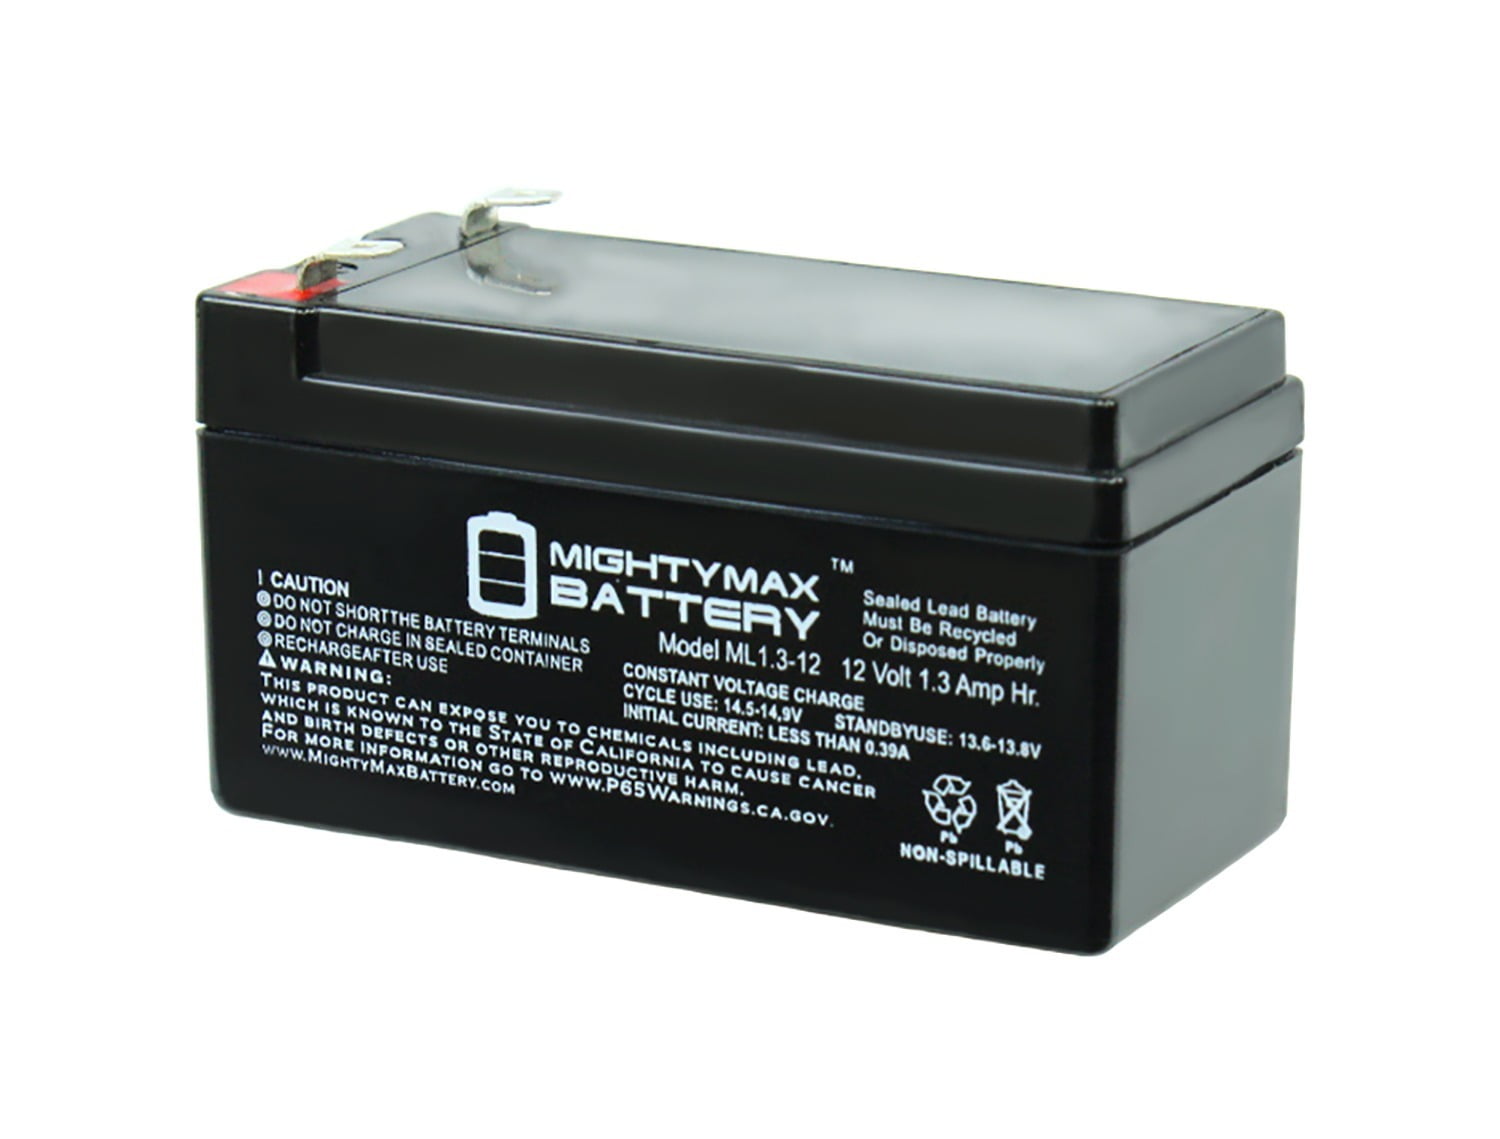 1.3 ah. Portalac аккумуляторы RXL 12023 12v 2,3ah. 1.3 Ah lead acid Battery ba20. 7ml5830-2ah. Аккумулятор Gaston gt12-2.2.